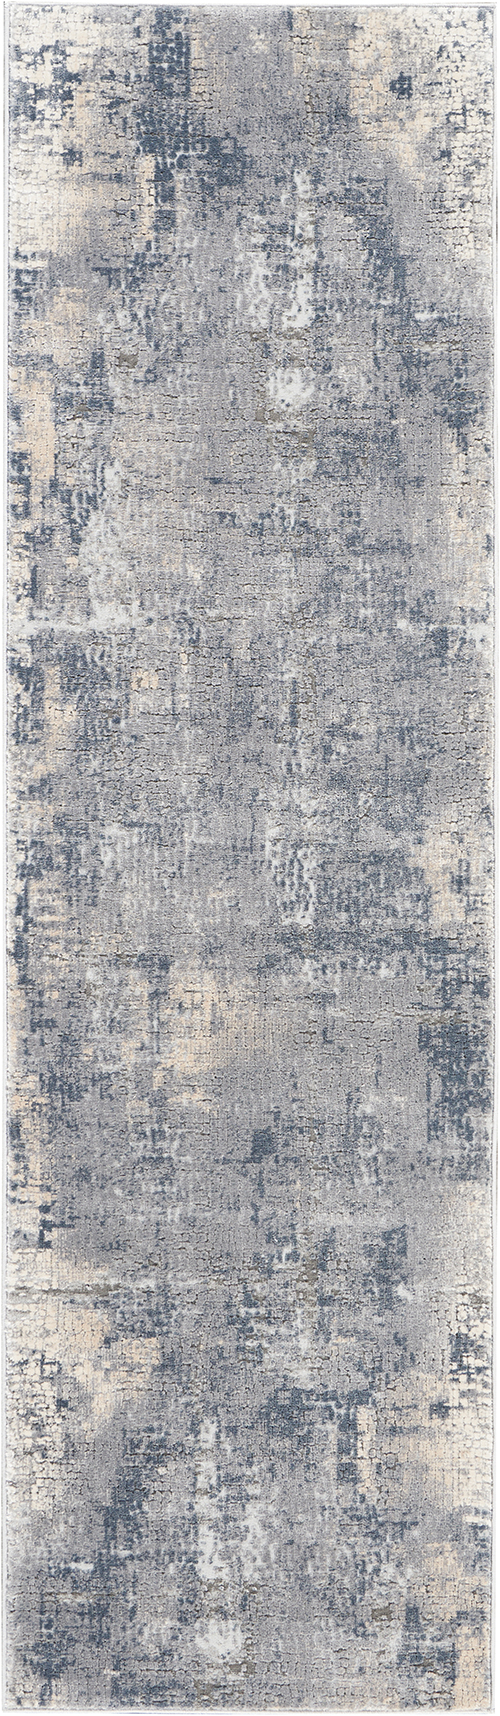 Nourison Rugs - Rustic Textures Runner RUS06 Rug in Grey / Beige - 2.3m x 0.66m